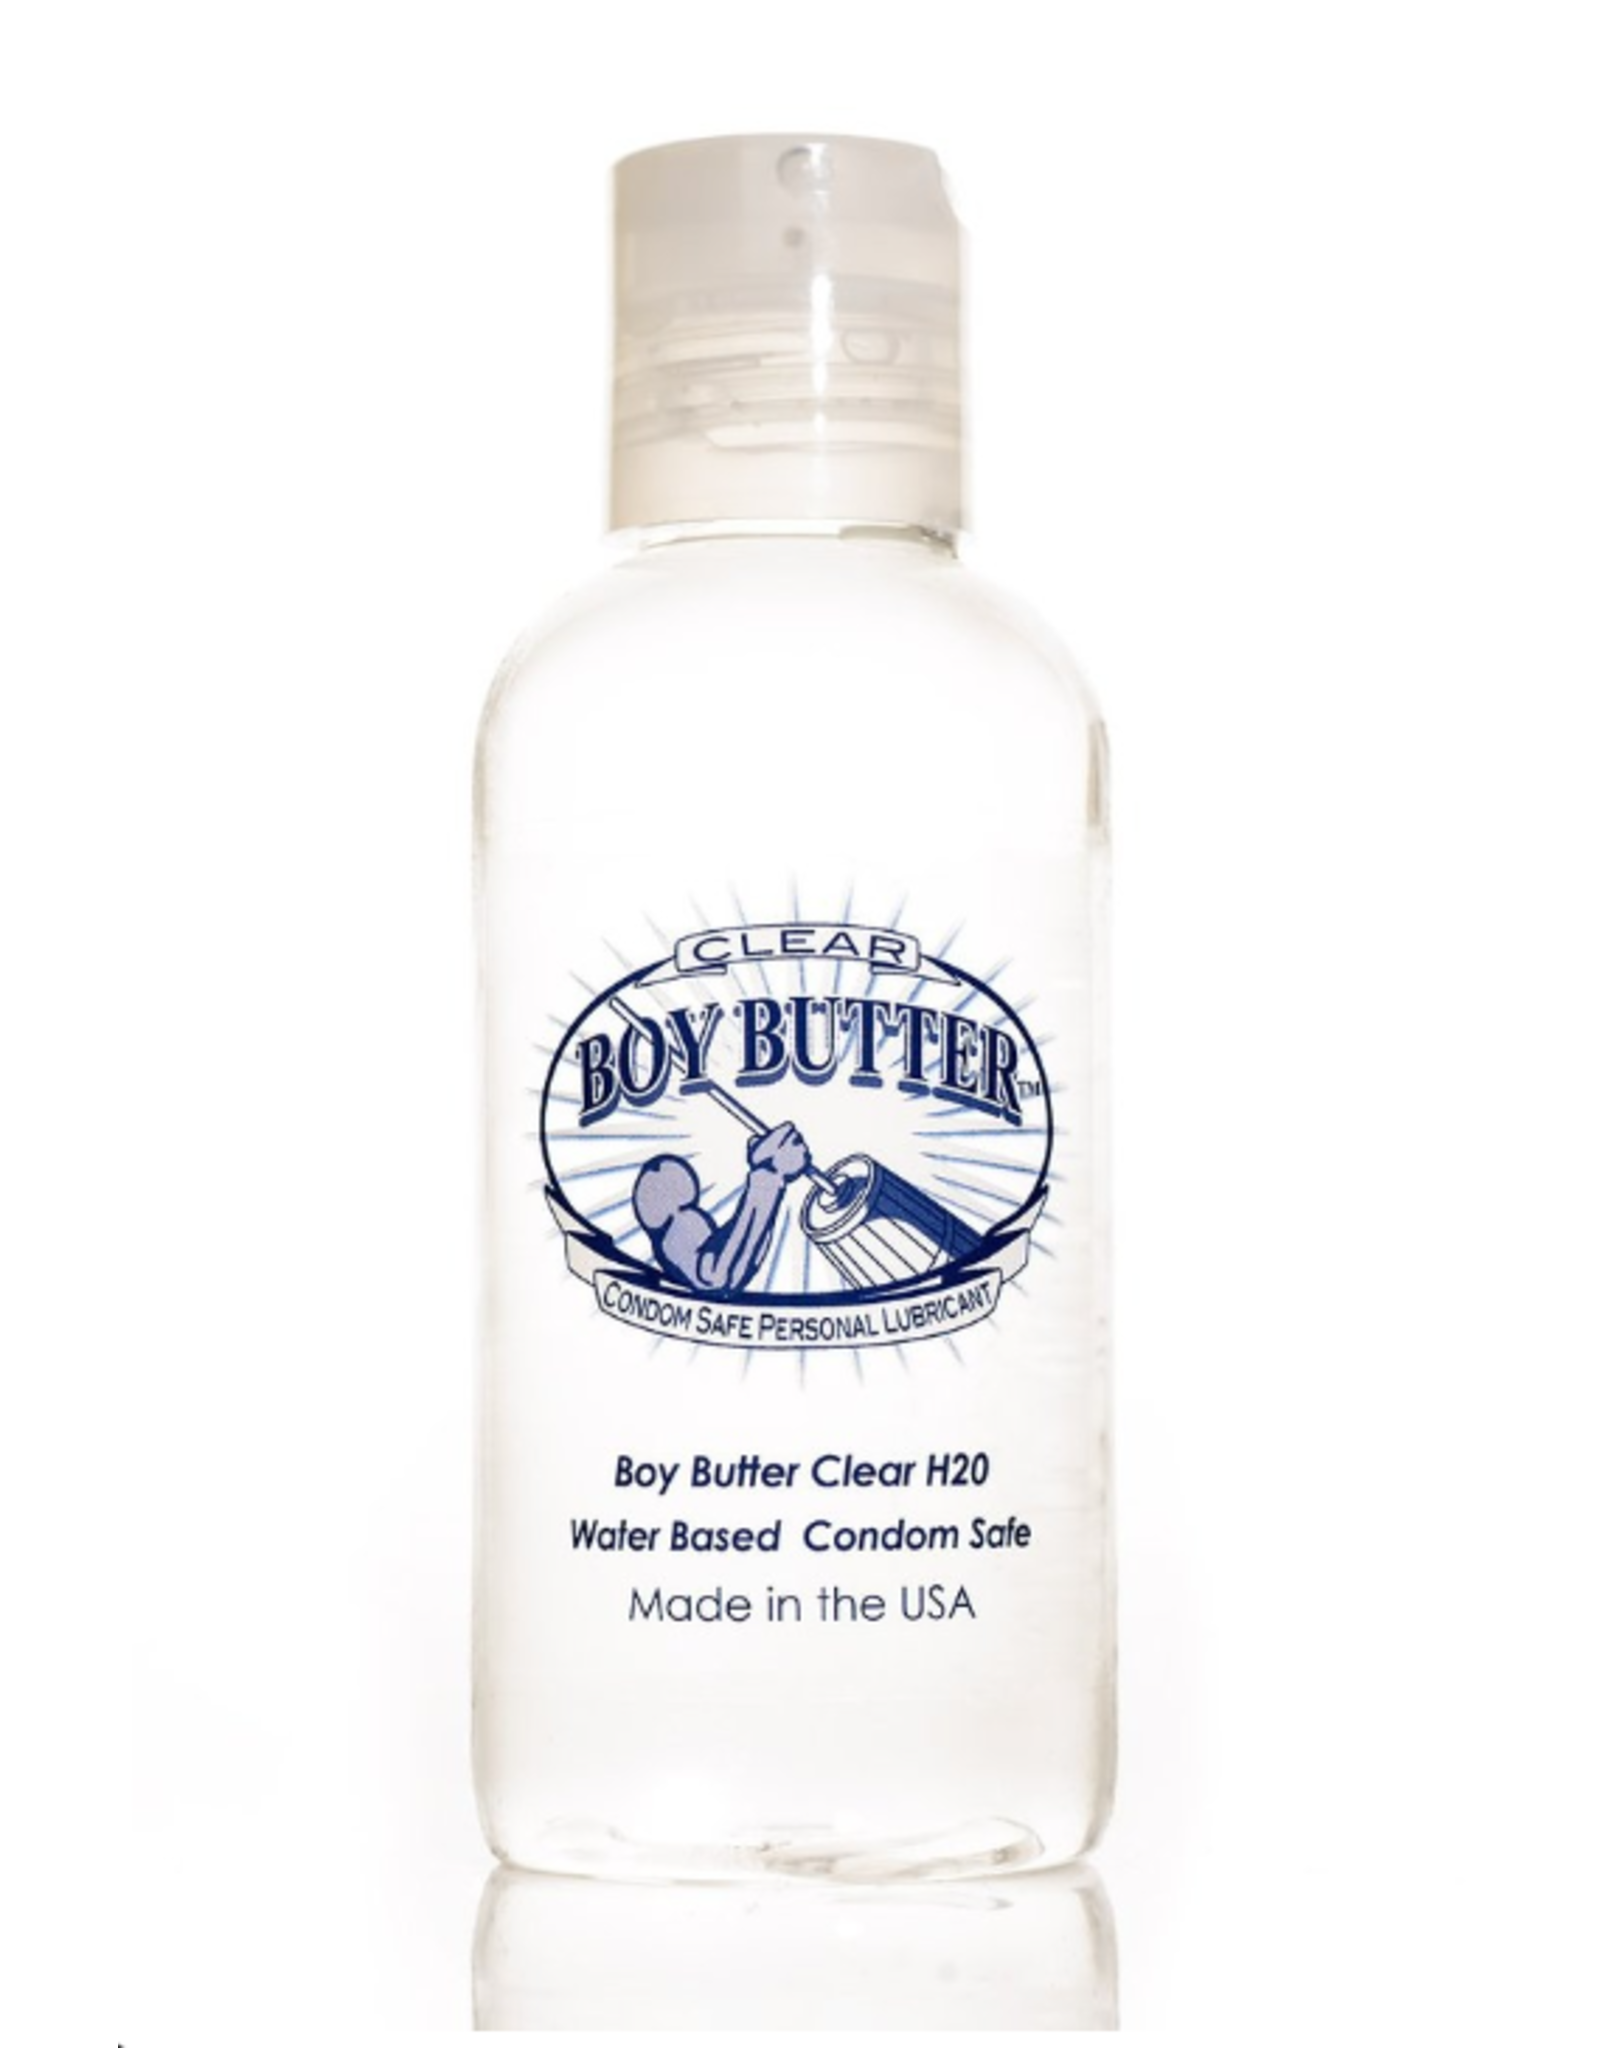 Boy Butter Boy Butter - Clear with Invisagel - 8 oz